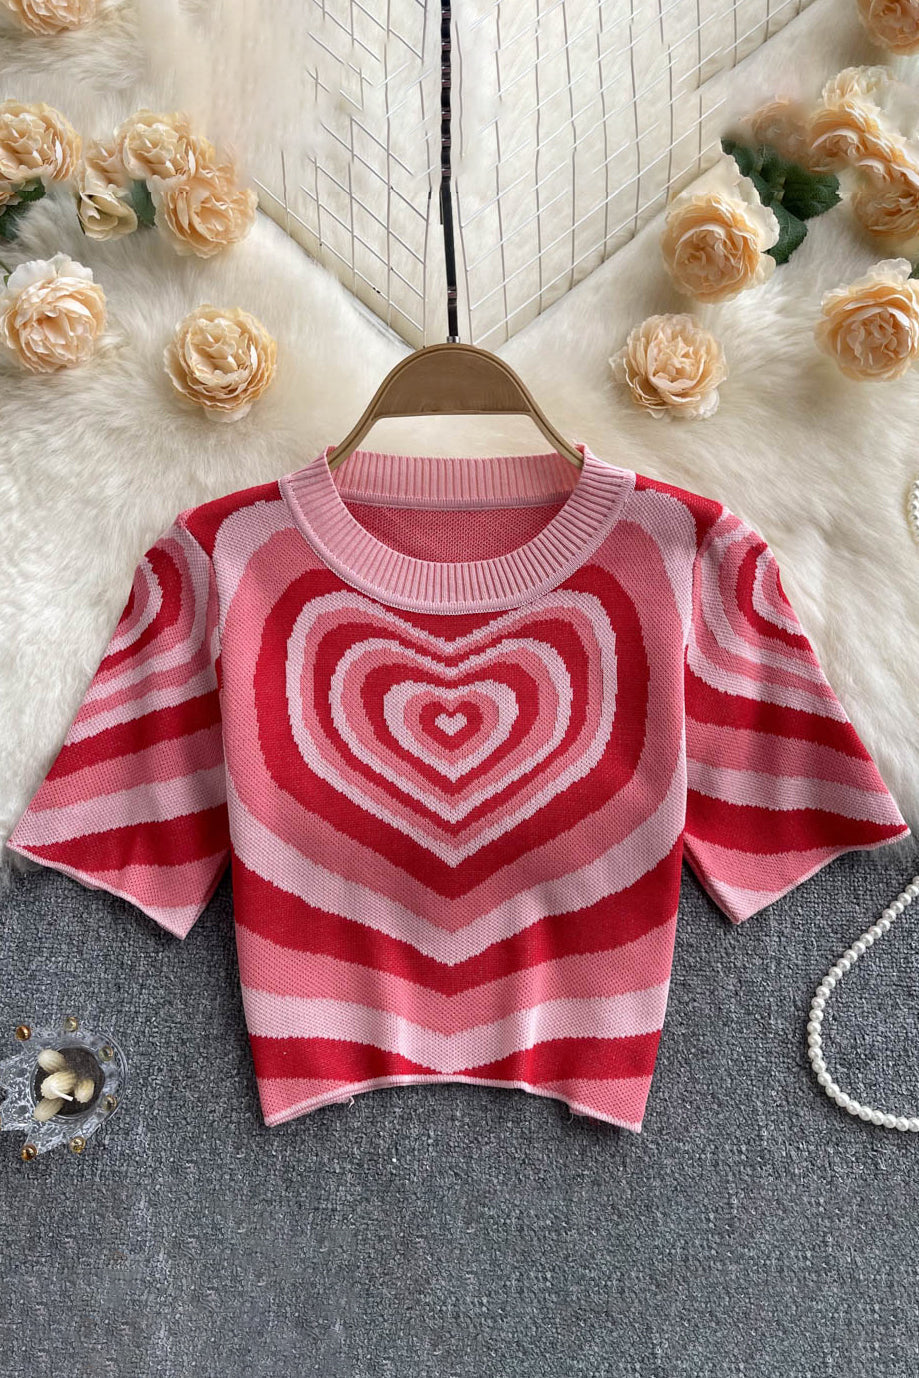 Short Sleeves Knitted Tops O Neck Elastic Waist Short T Shirt Style Heart Print Knit Blouse